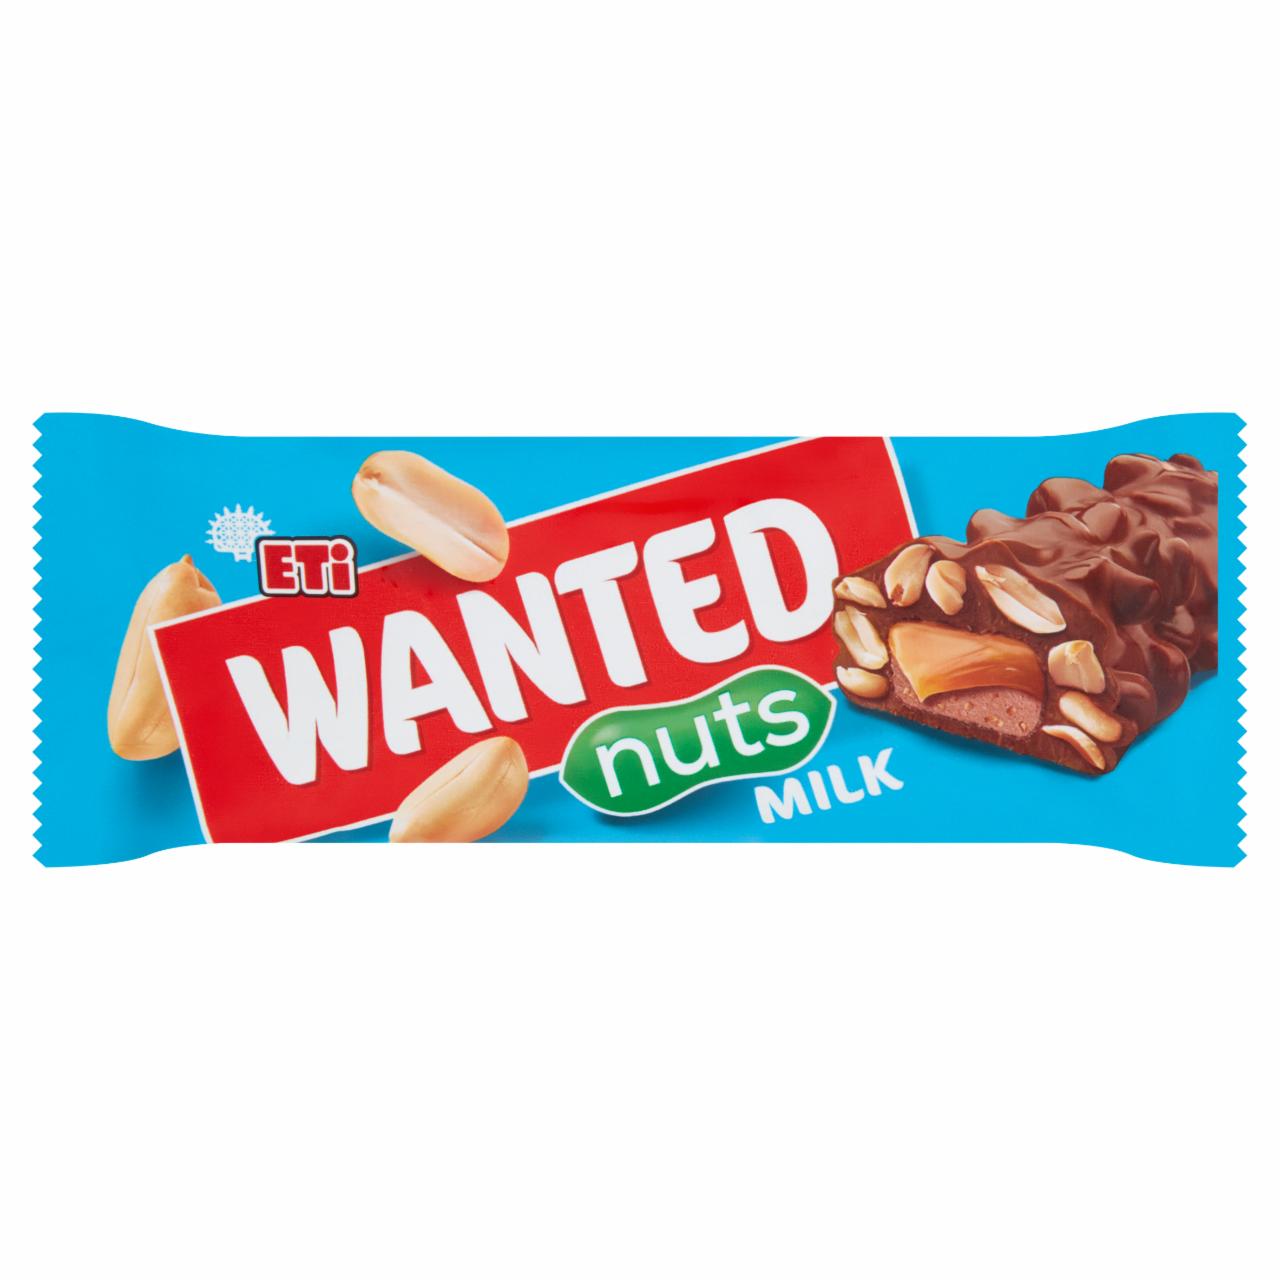 Fotografie - Wanted Nuts Milk Eti